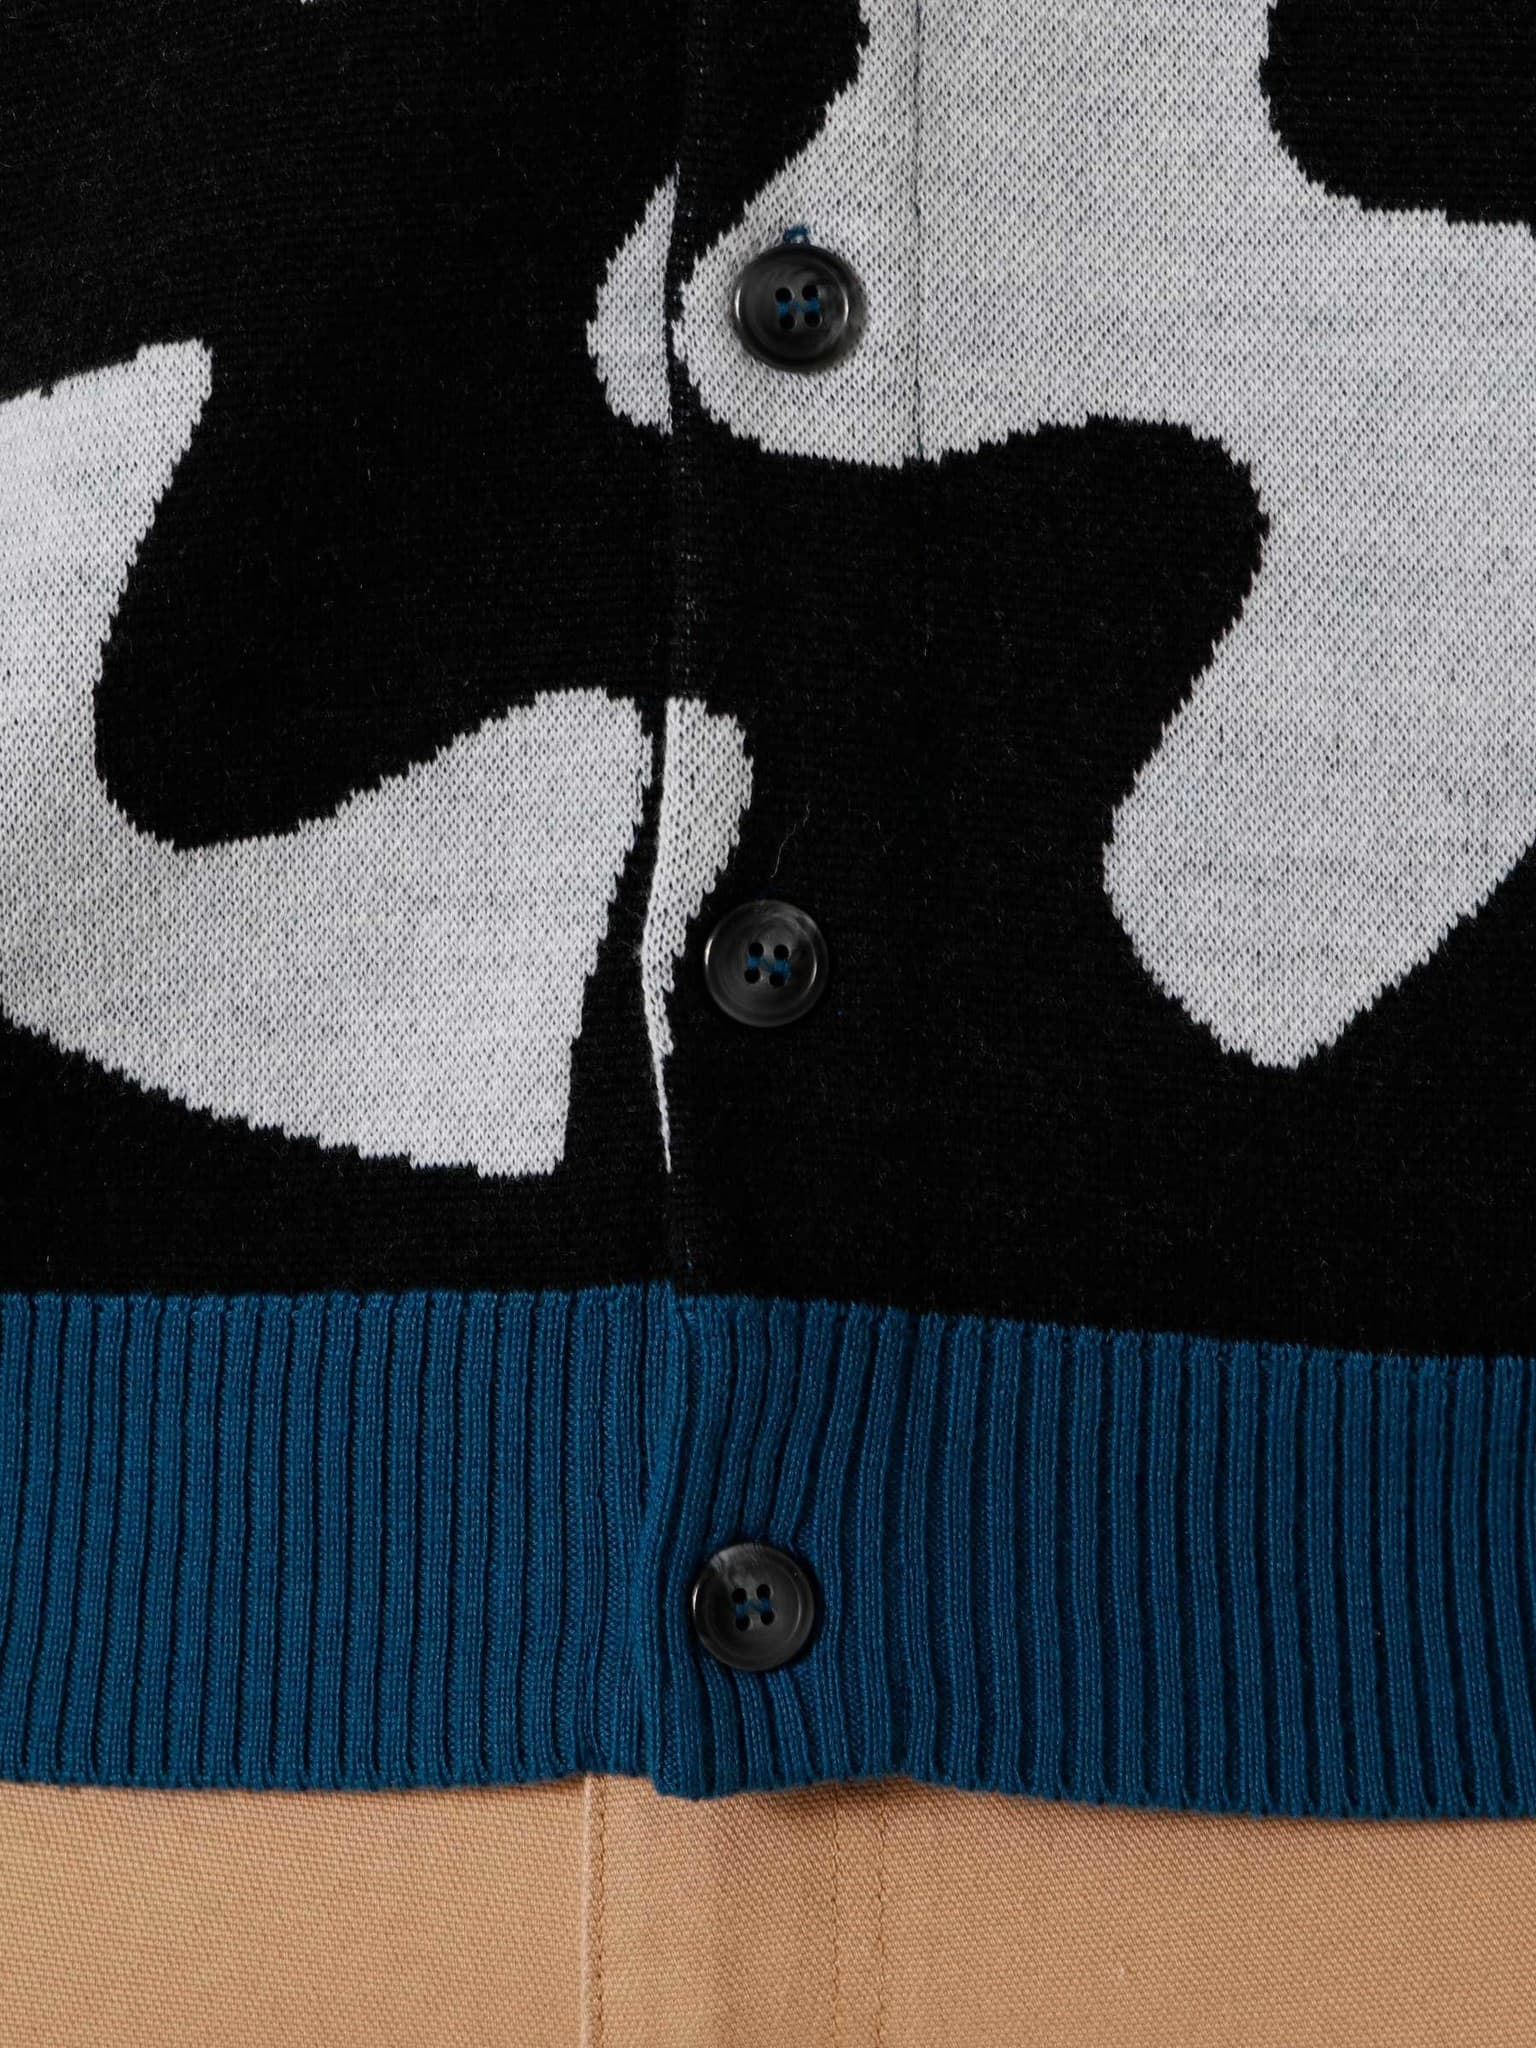 Too Loud Knitted Cardigan Multi 45090